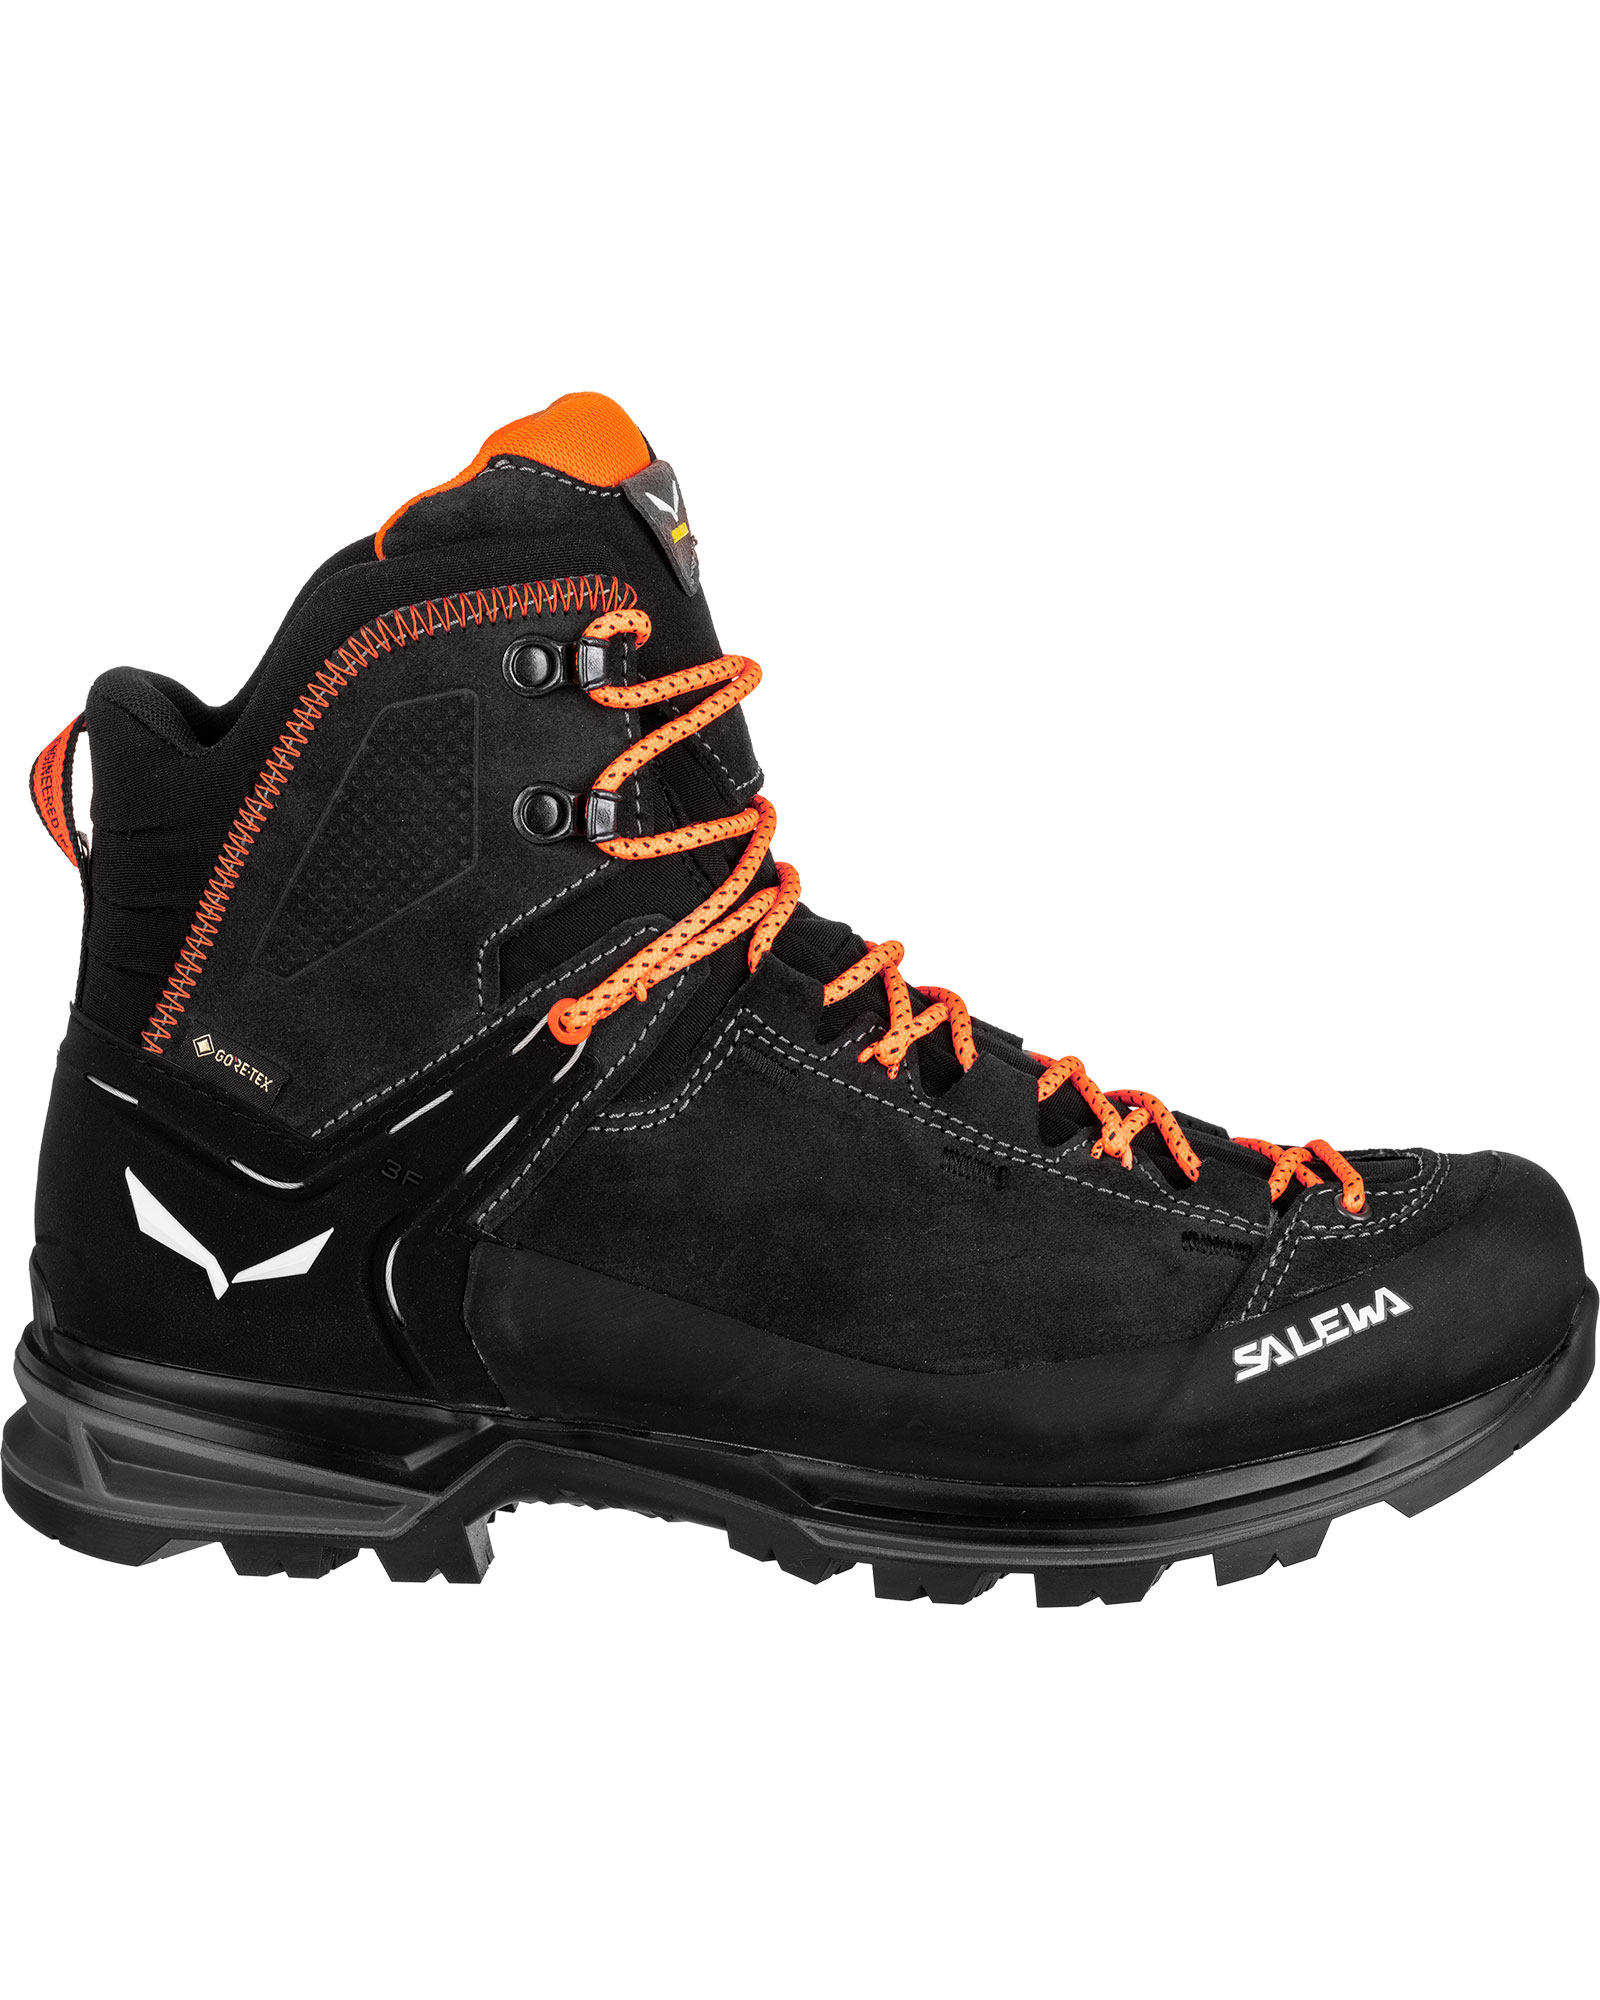 Salewa Mountain Trainer 2 Mid GORE TEX Men’s Boots - Onyx UK 8